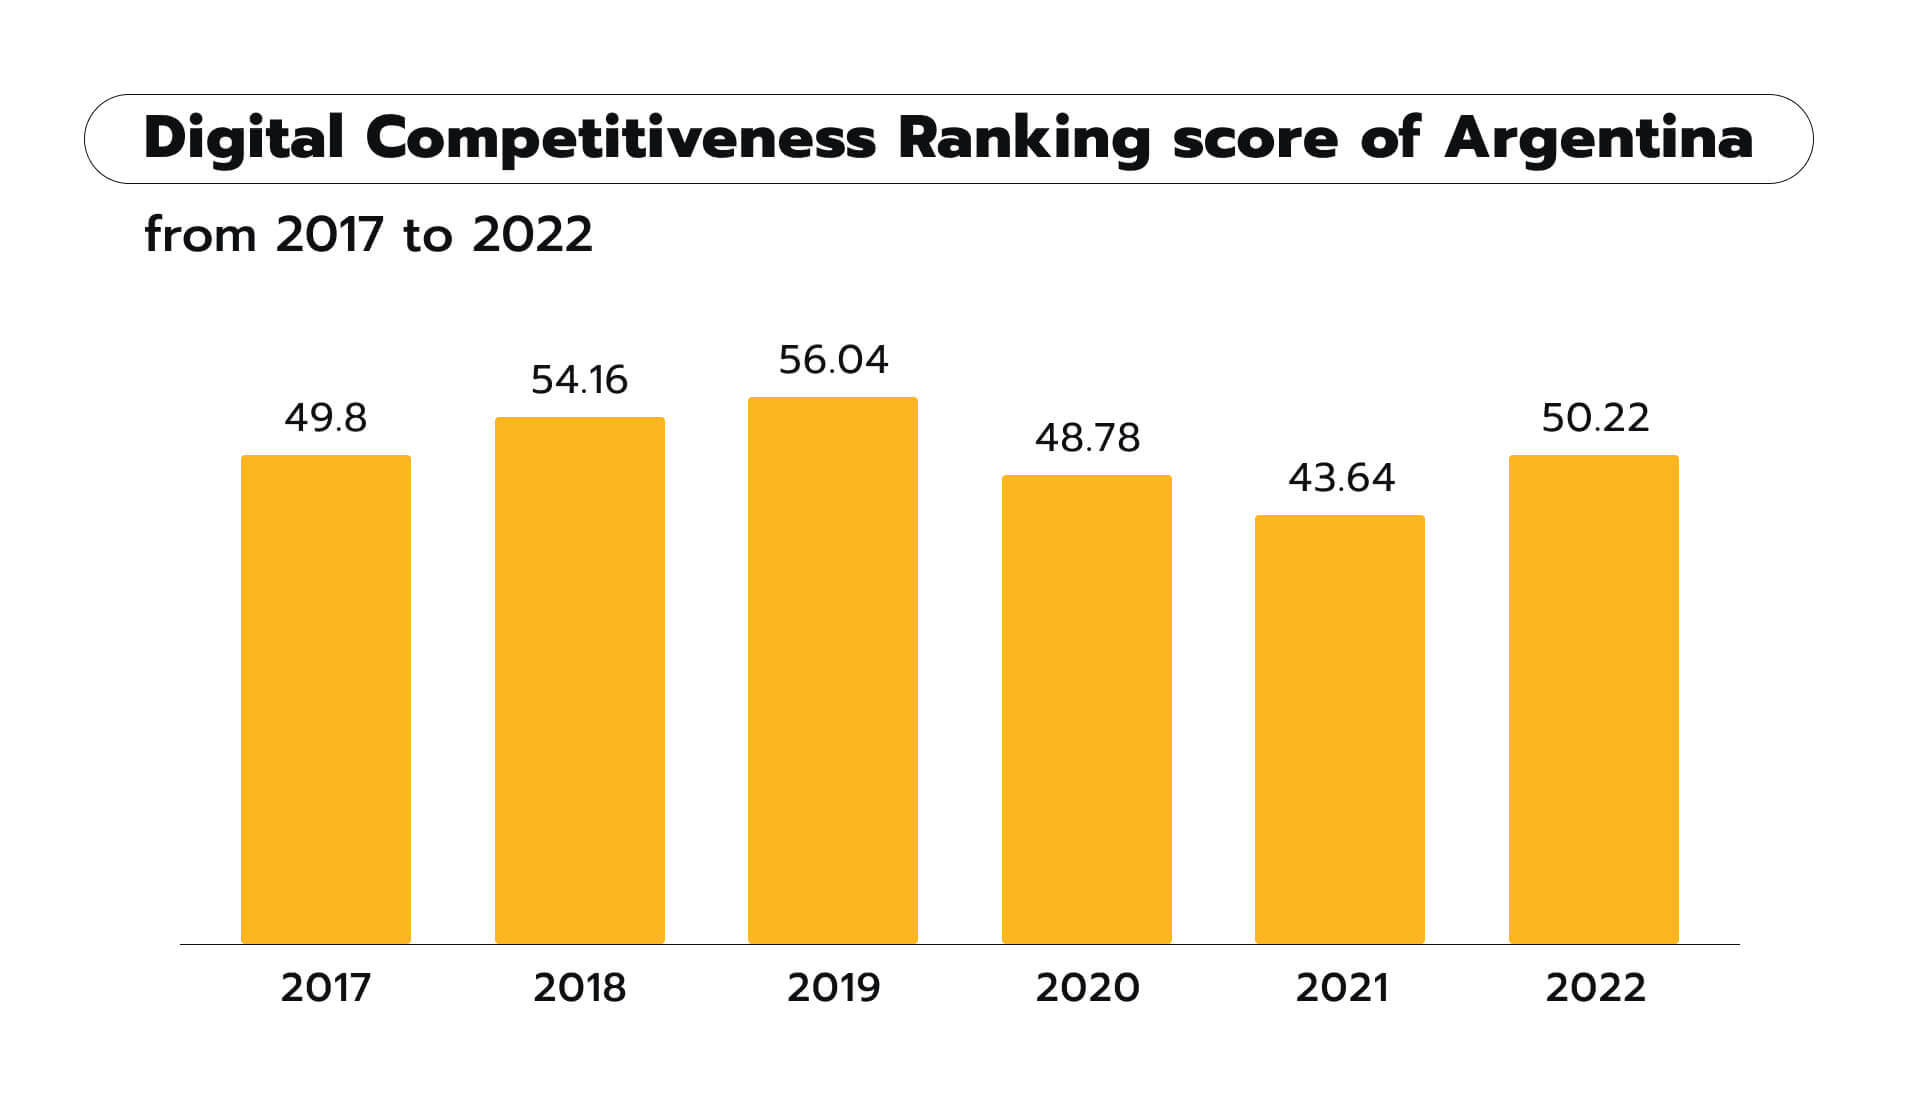 digital competitiveness ranking score of Argentina